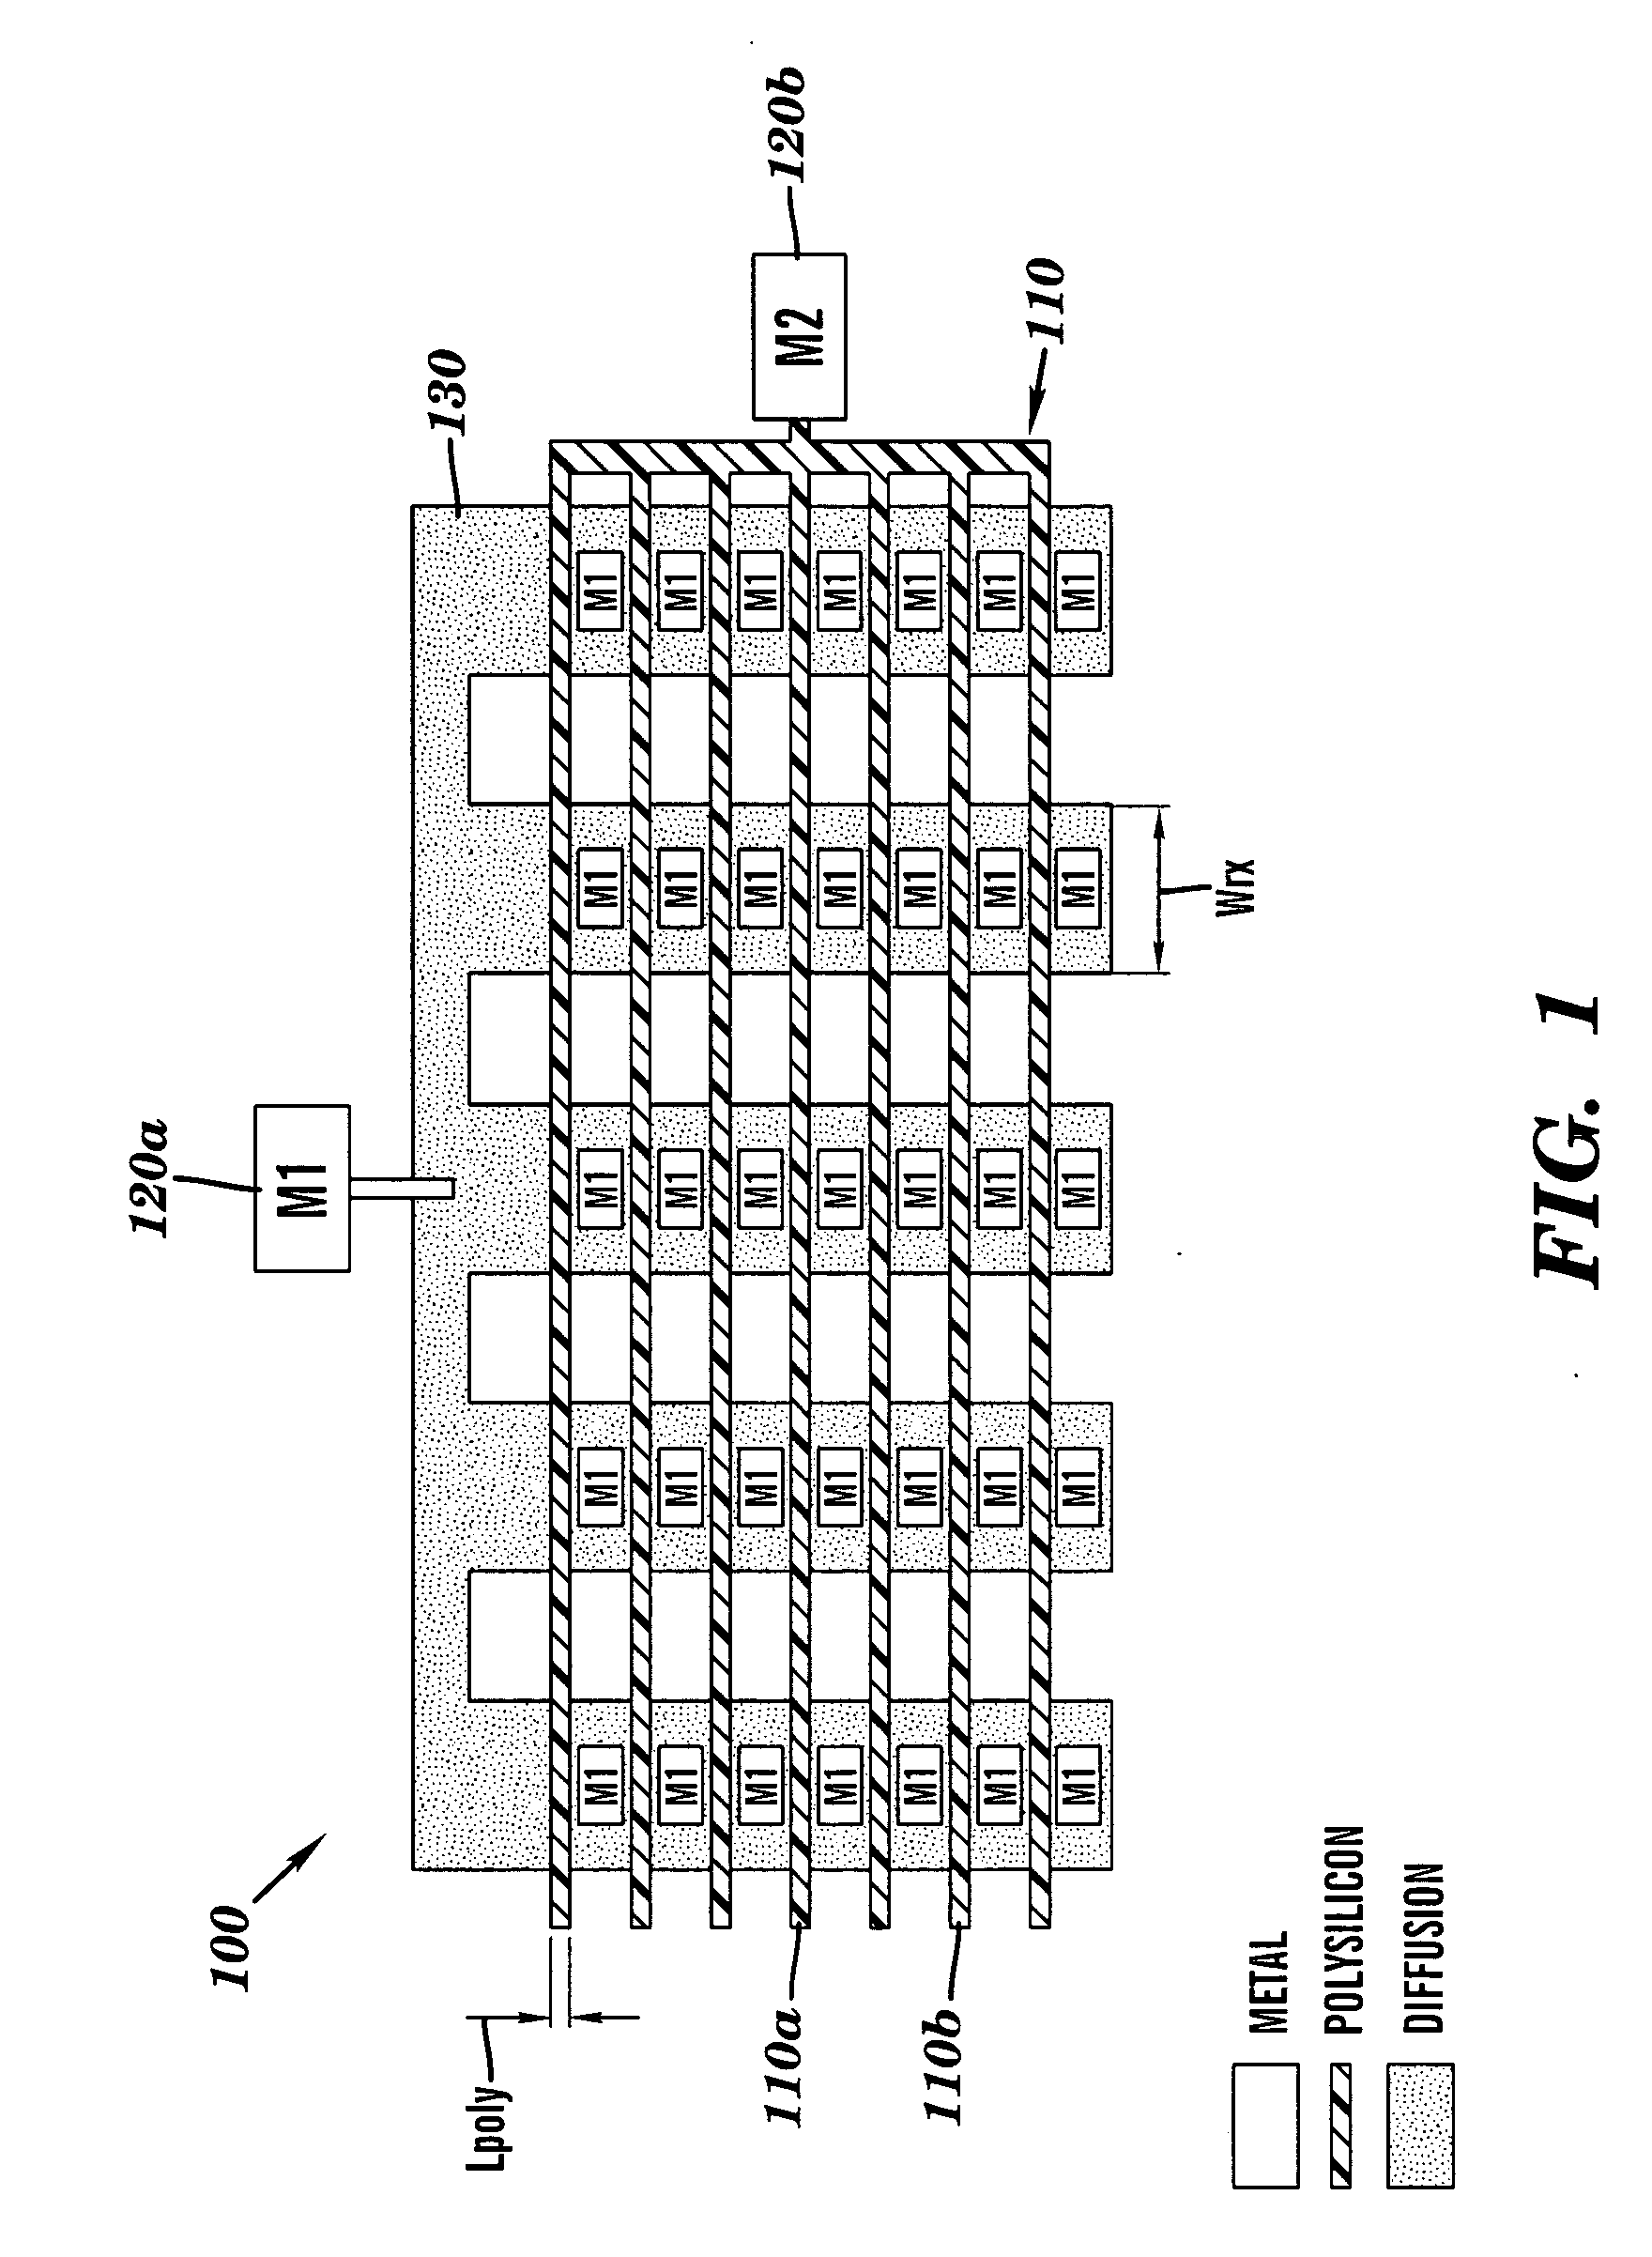 Structure for monitoring semiconductor polysilicon gate profile